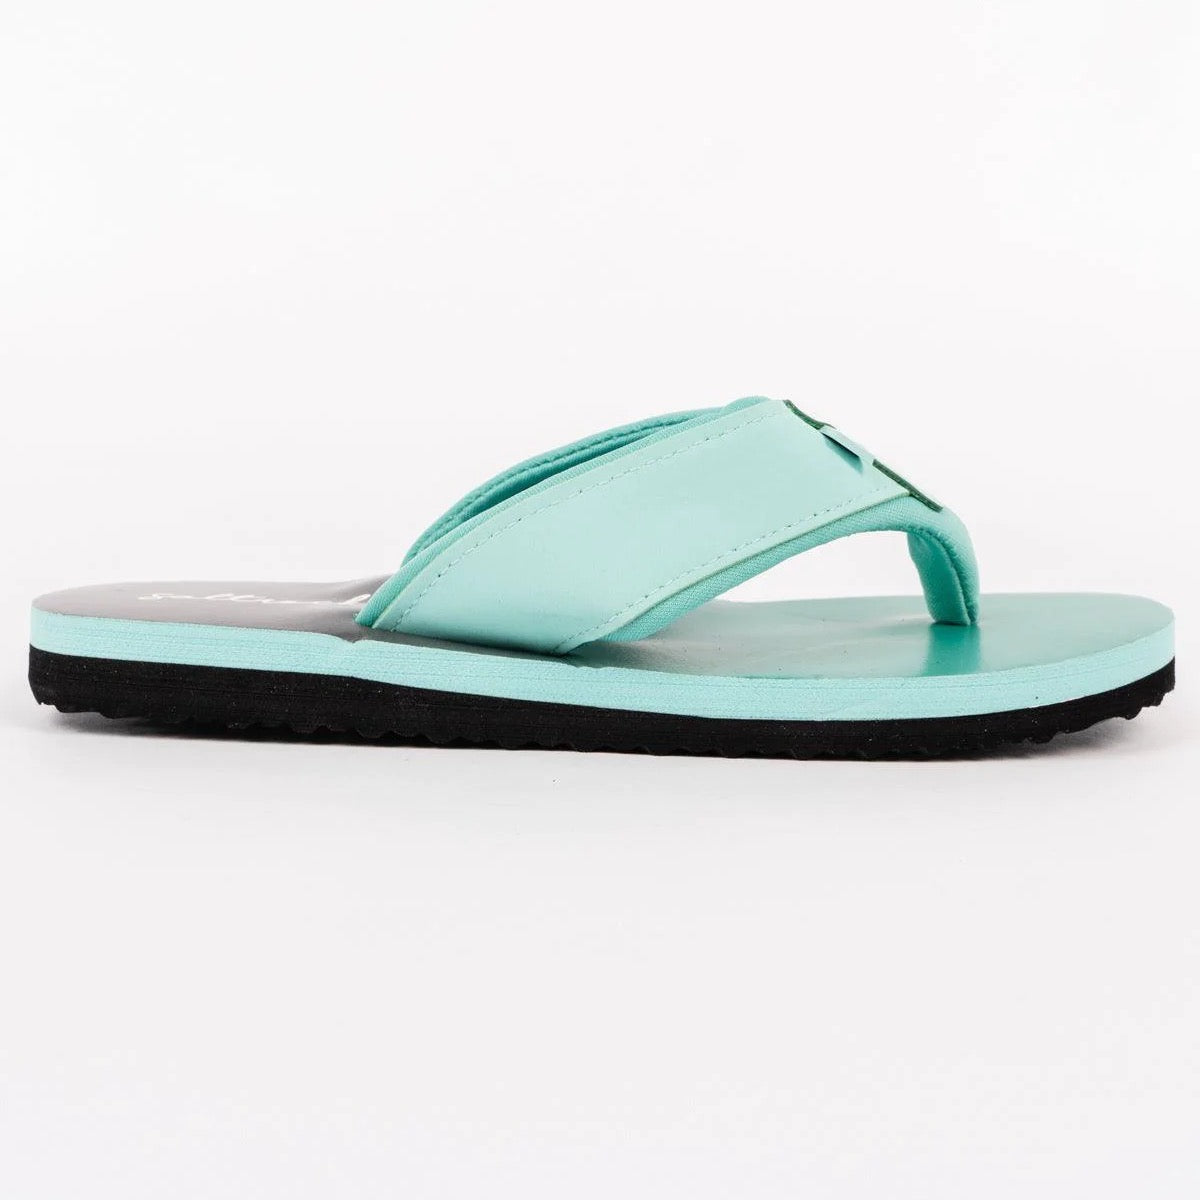 Saltrock Womens Fader Flip Flops Footwear EU 36 / Turquoise,EU 37 / Turquoise,EU 38 / Turquoise,EU 40 / Turquoise